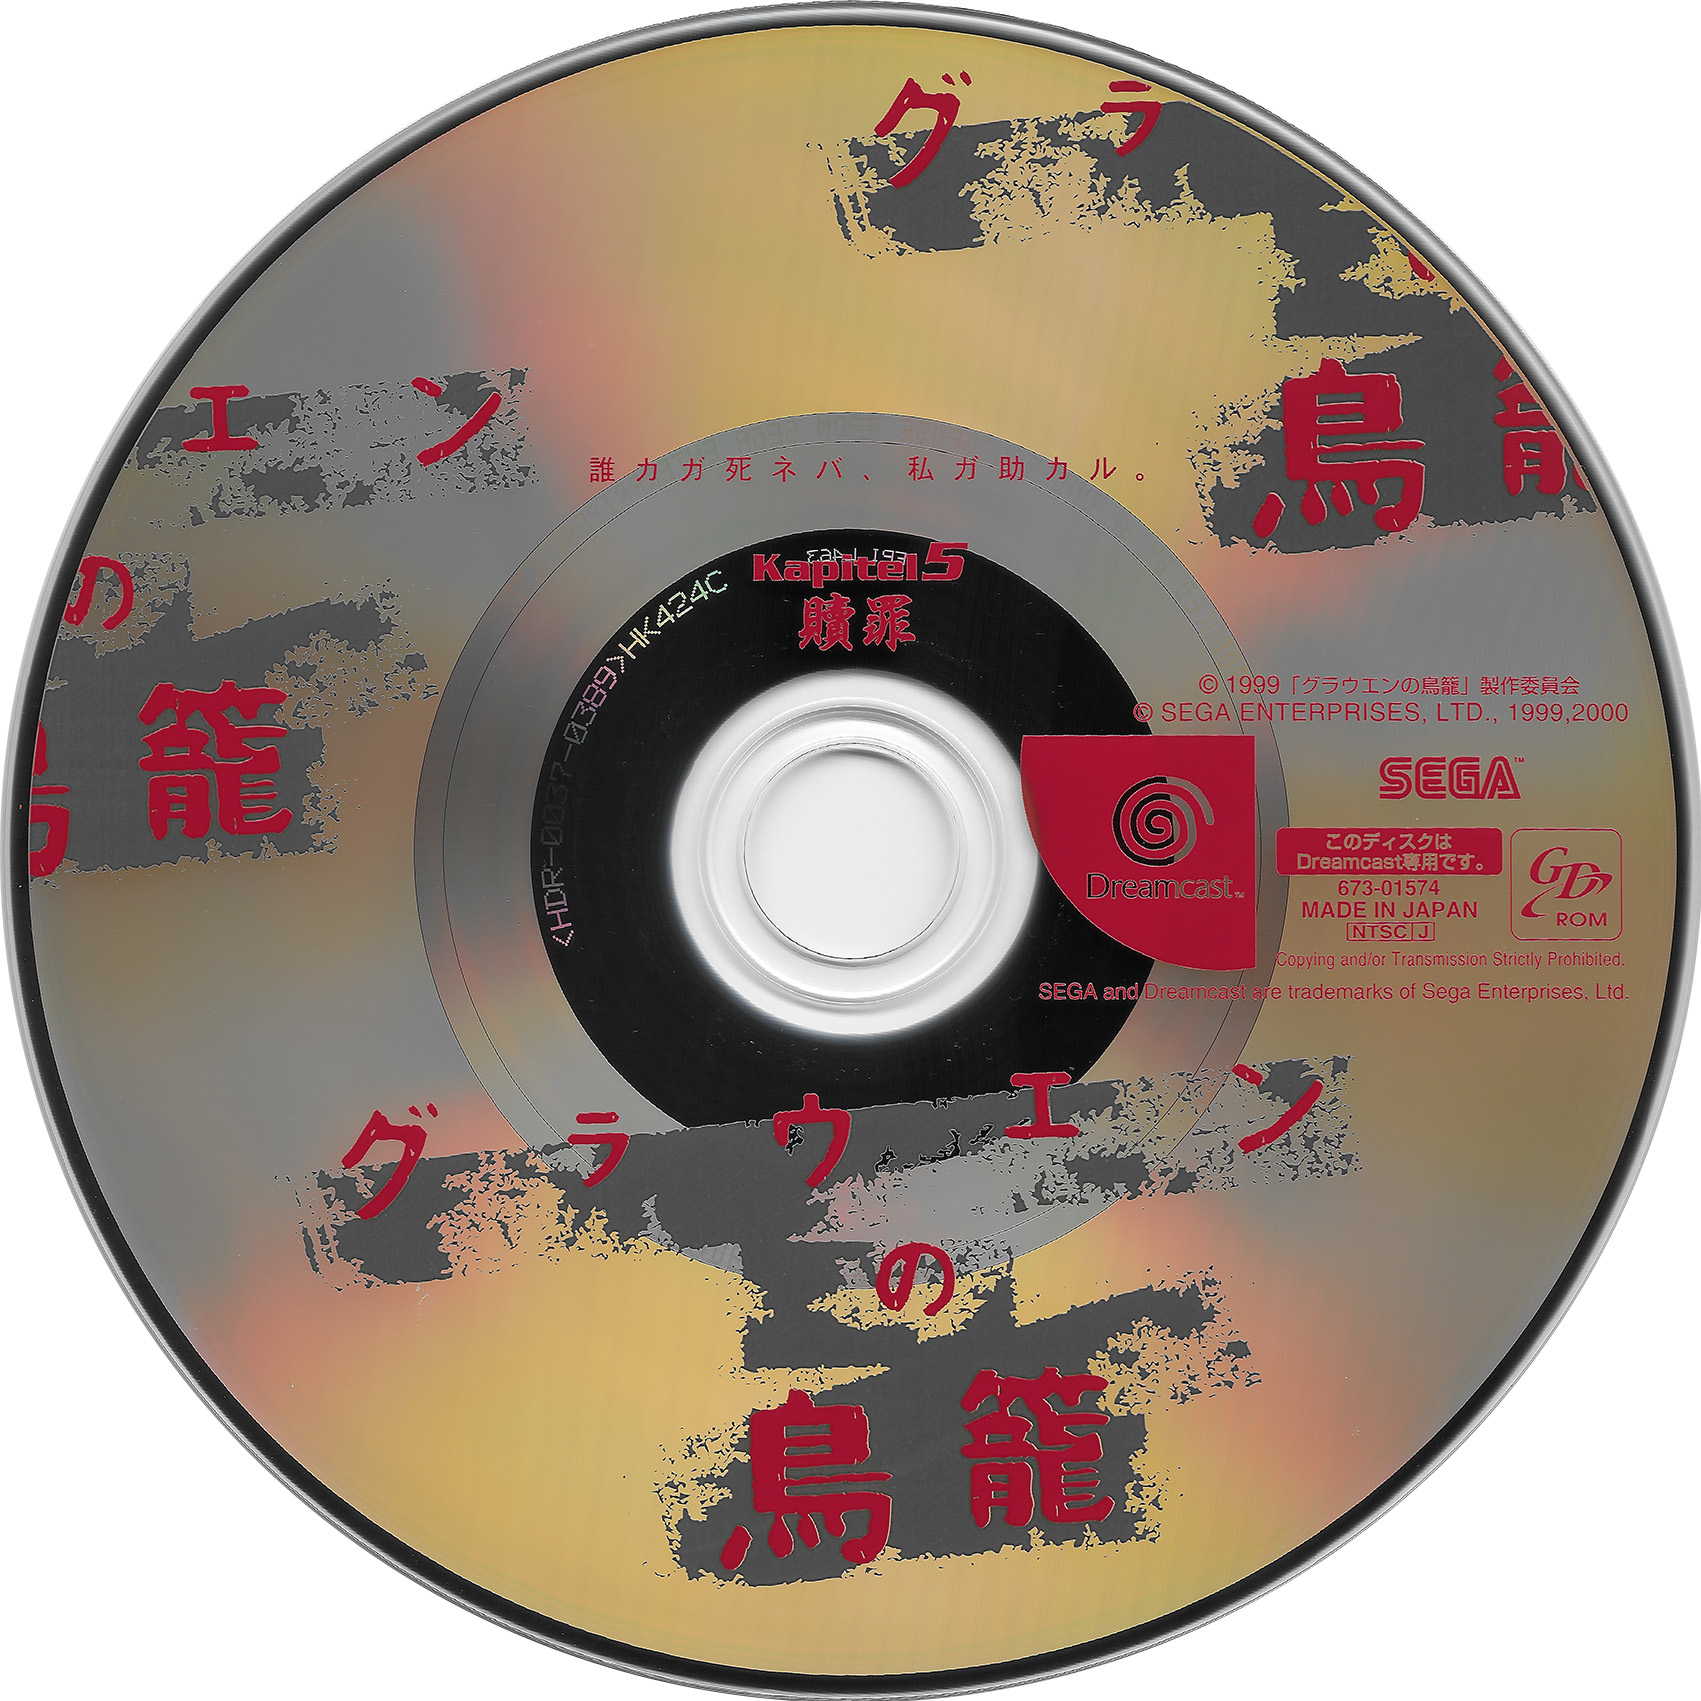 Disc - Cover.jpg